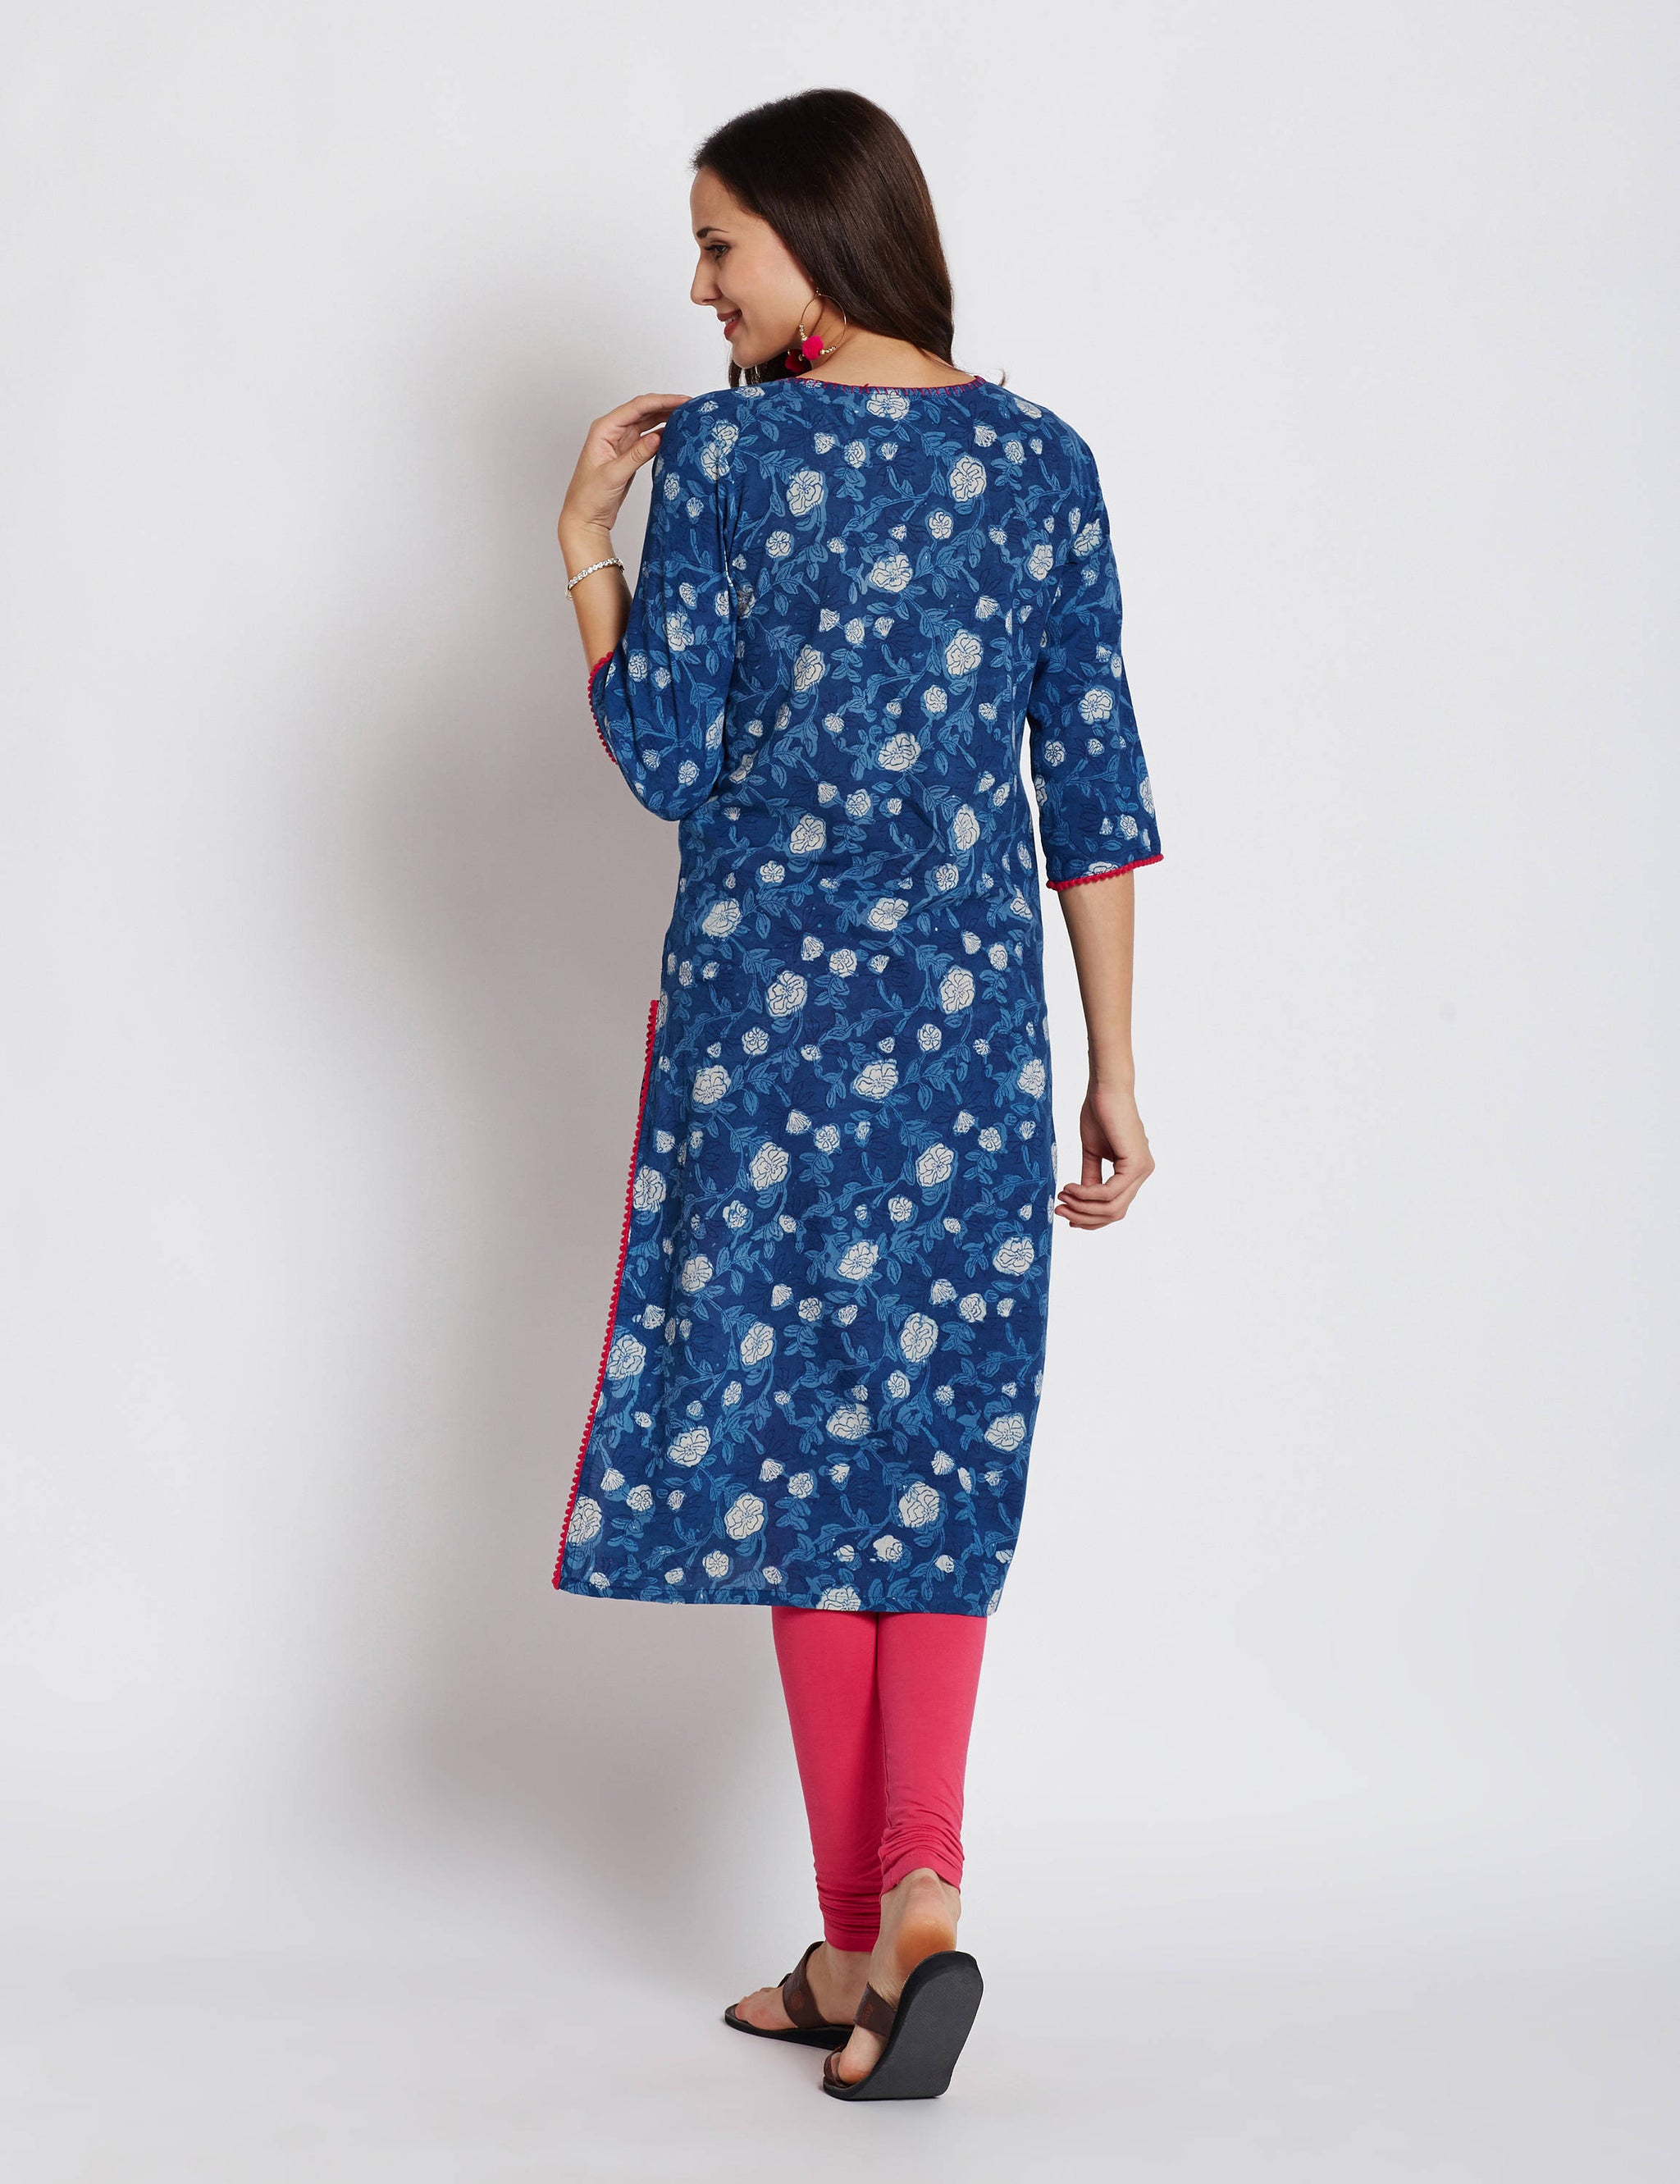 Indigo Hand block printed ethnic long Indian pocket kurta with hand embroidery & pompom lace